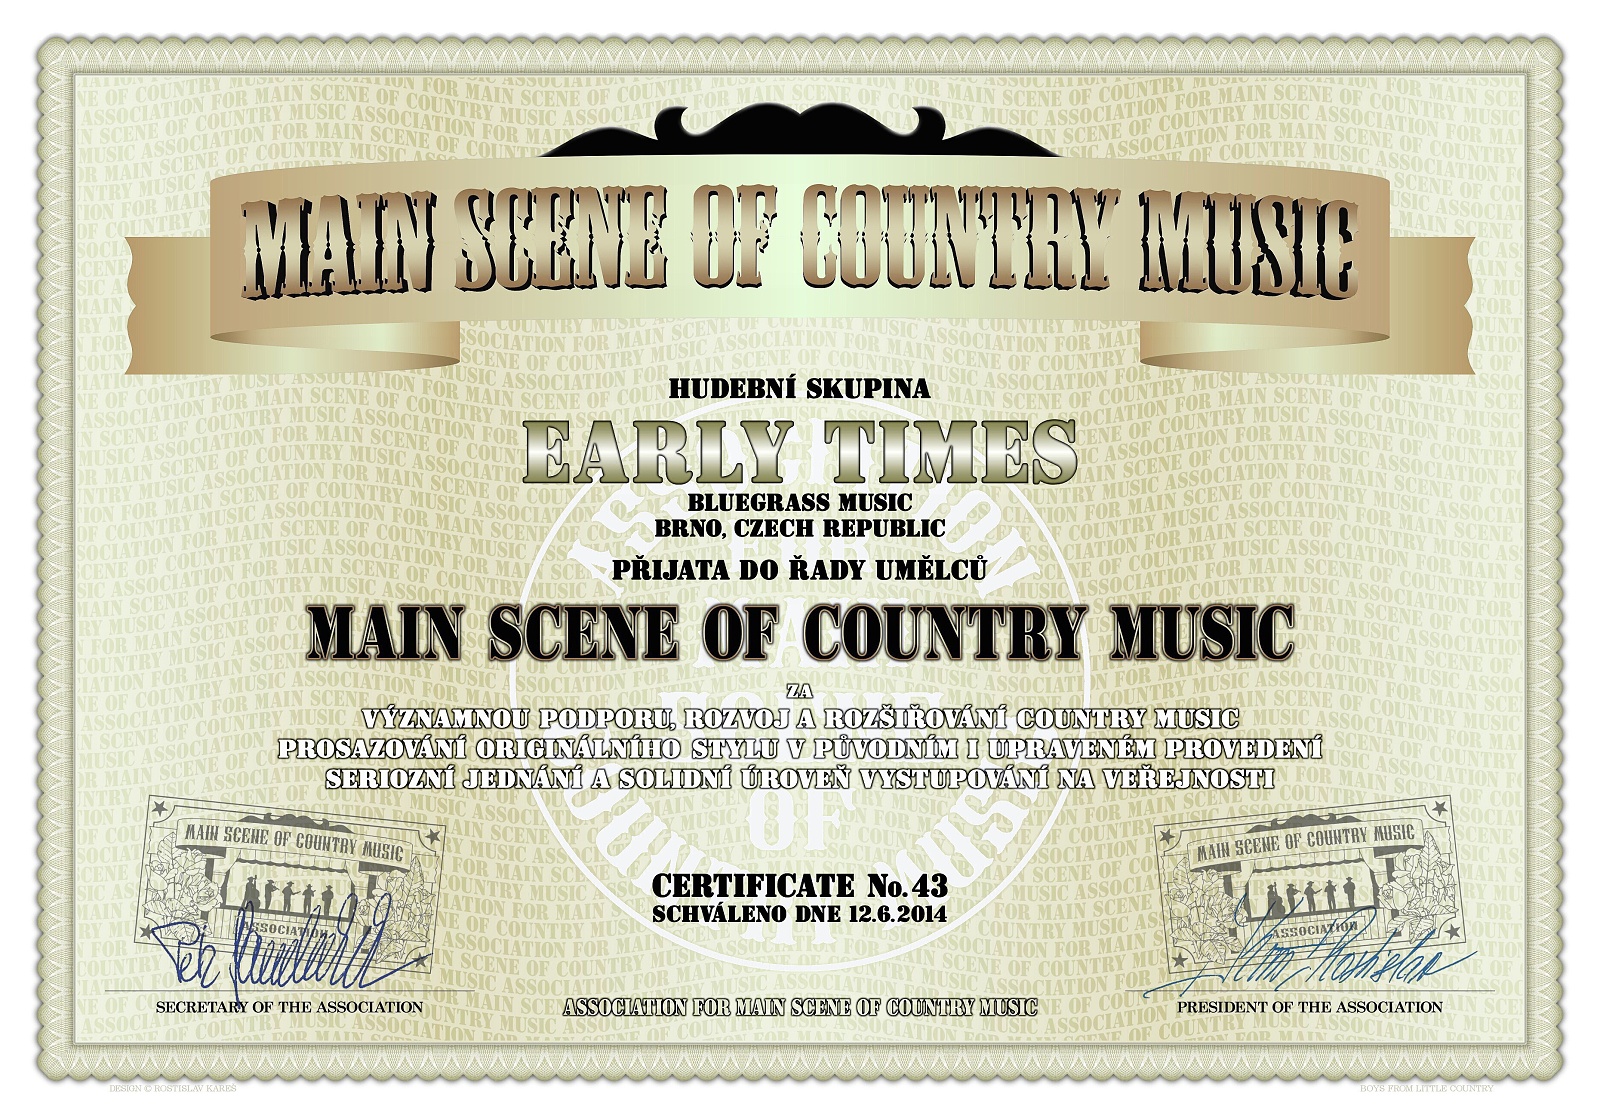 CE 43 - Main Scene of Country Music